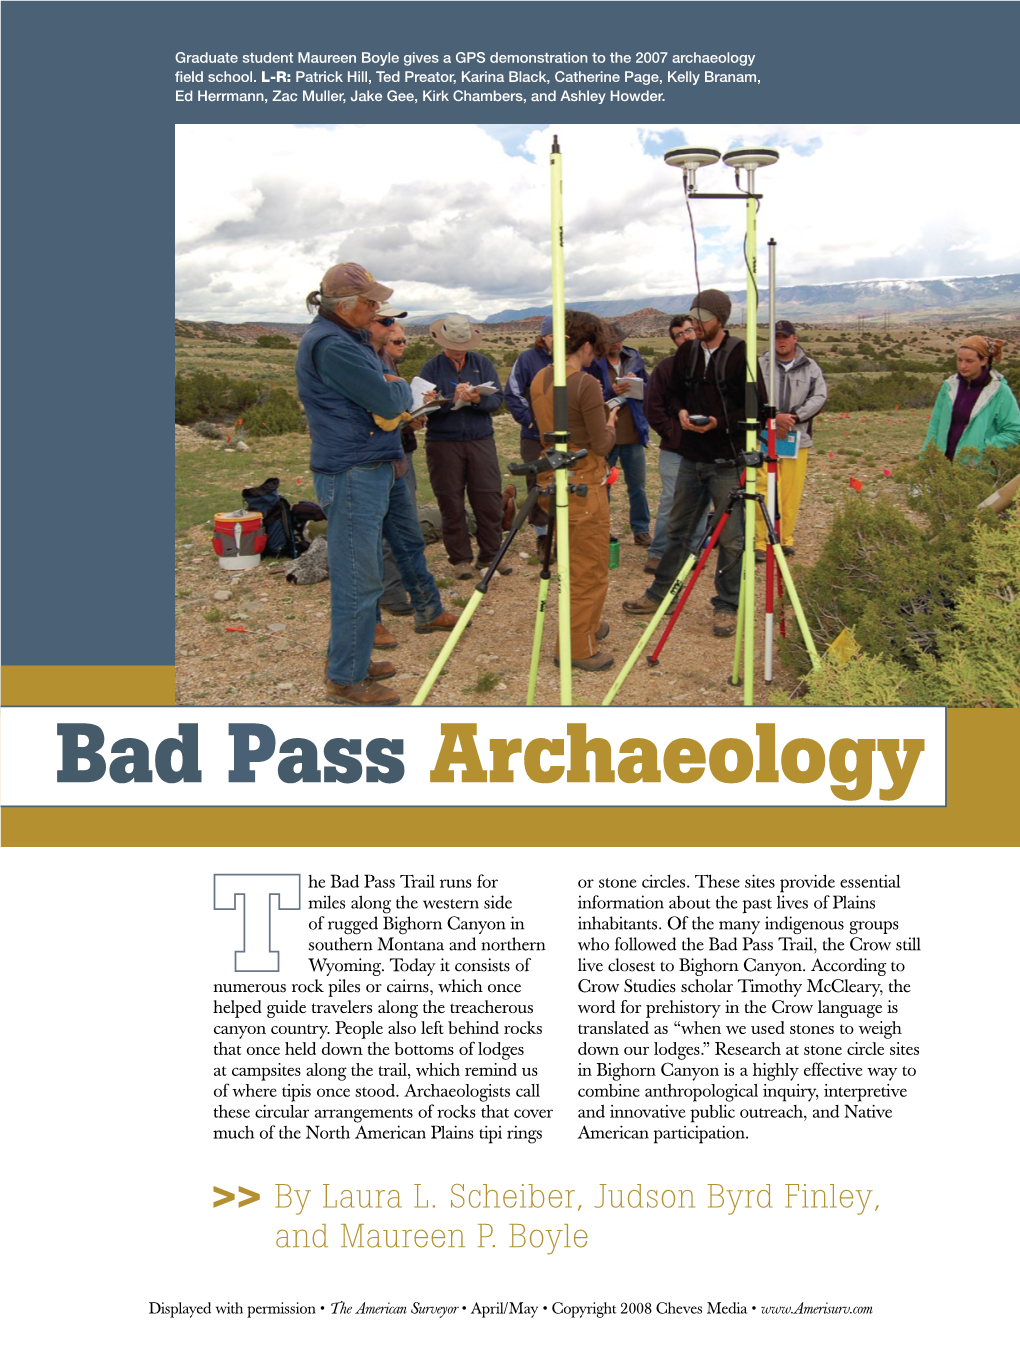 Bad Pass Archaeology